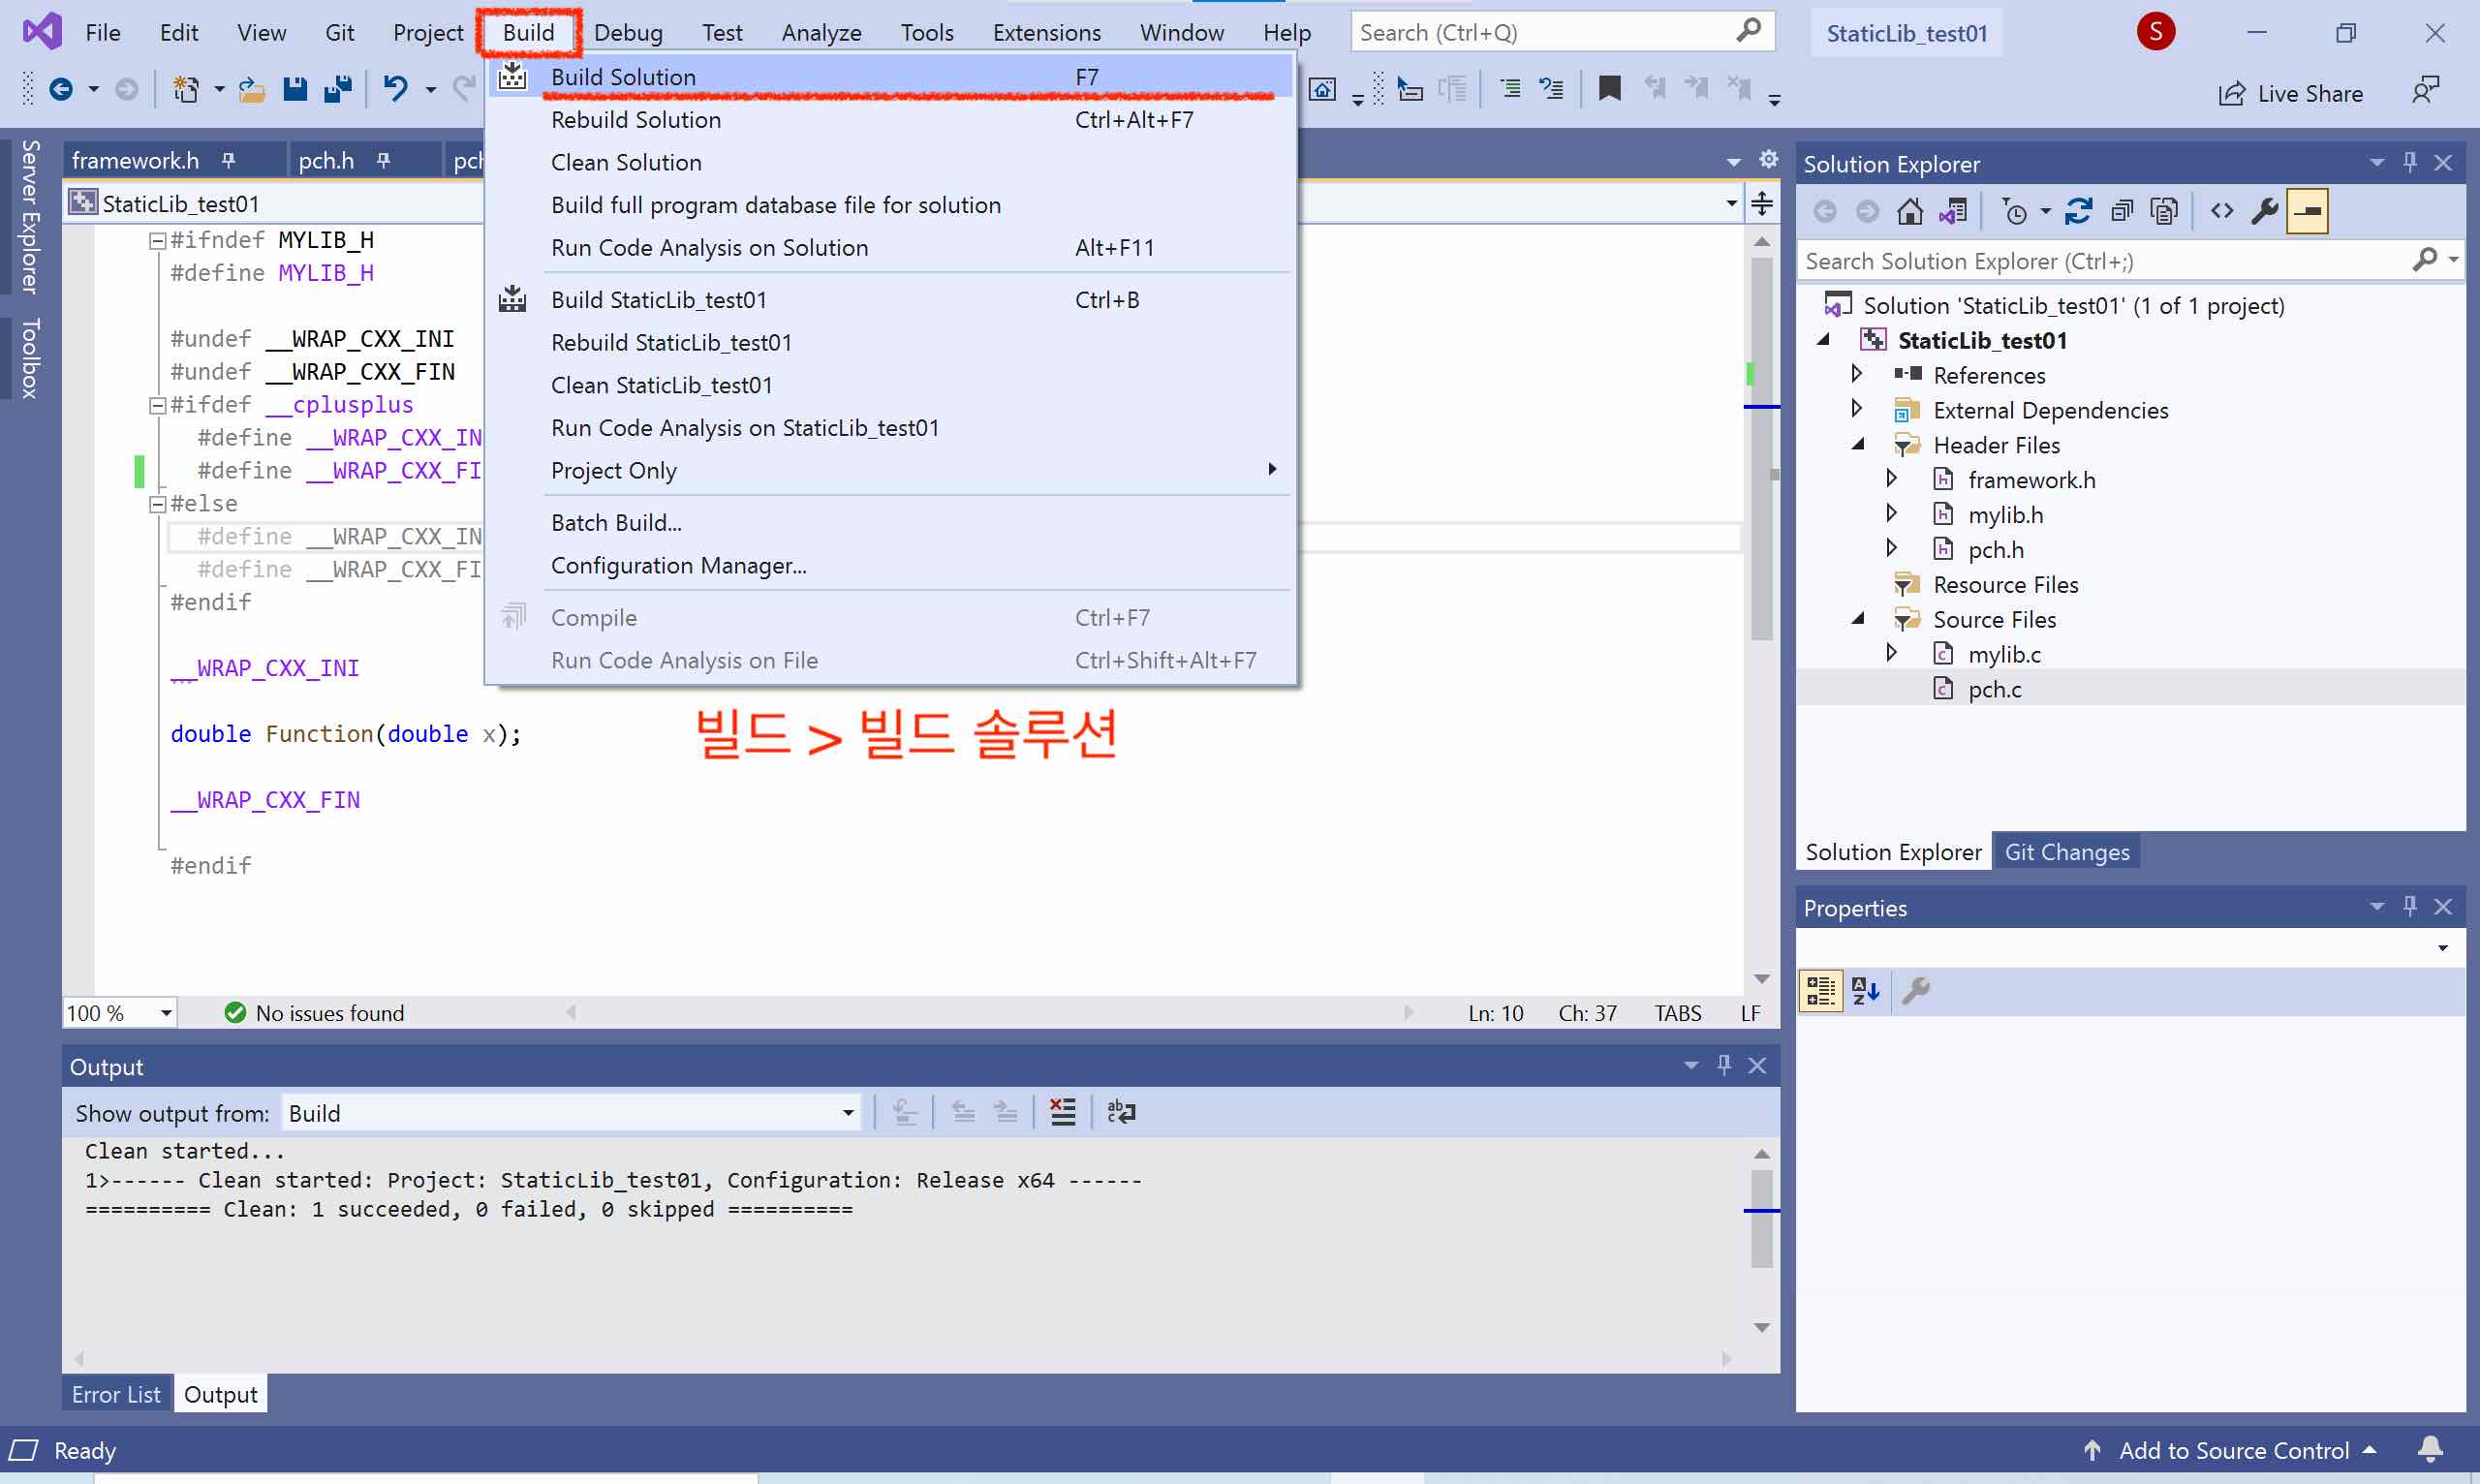 screenshot of Visual Studio Community 2019, showing the build project menu in the main screen